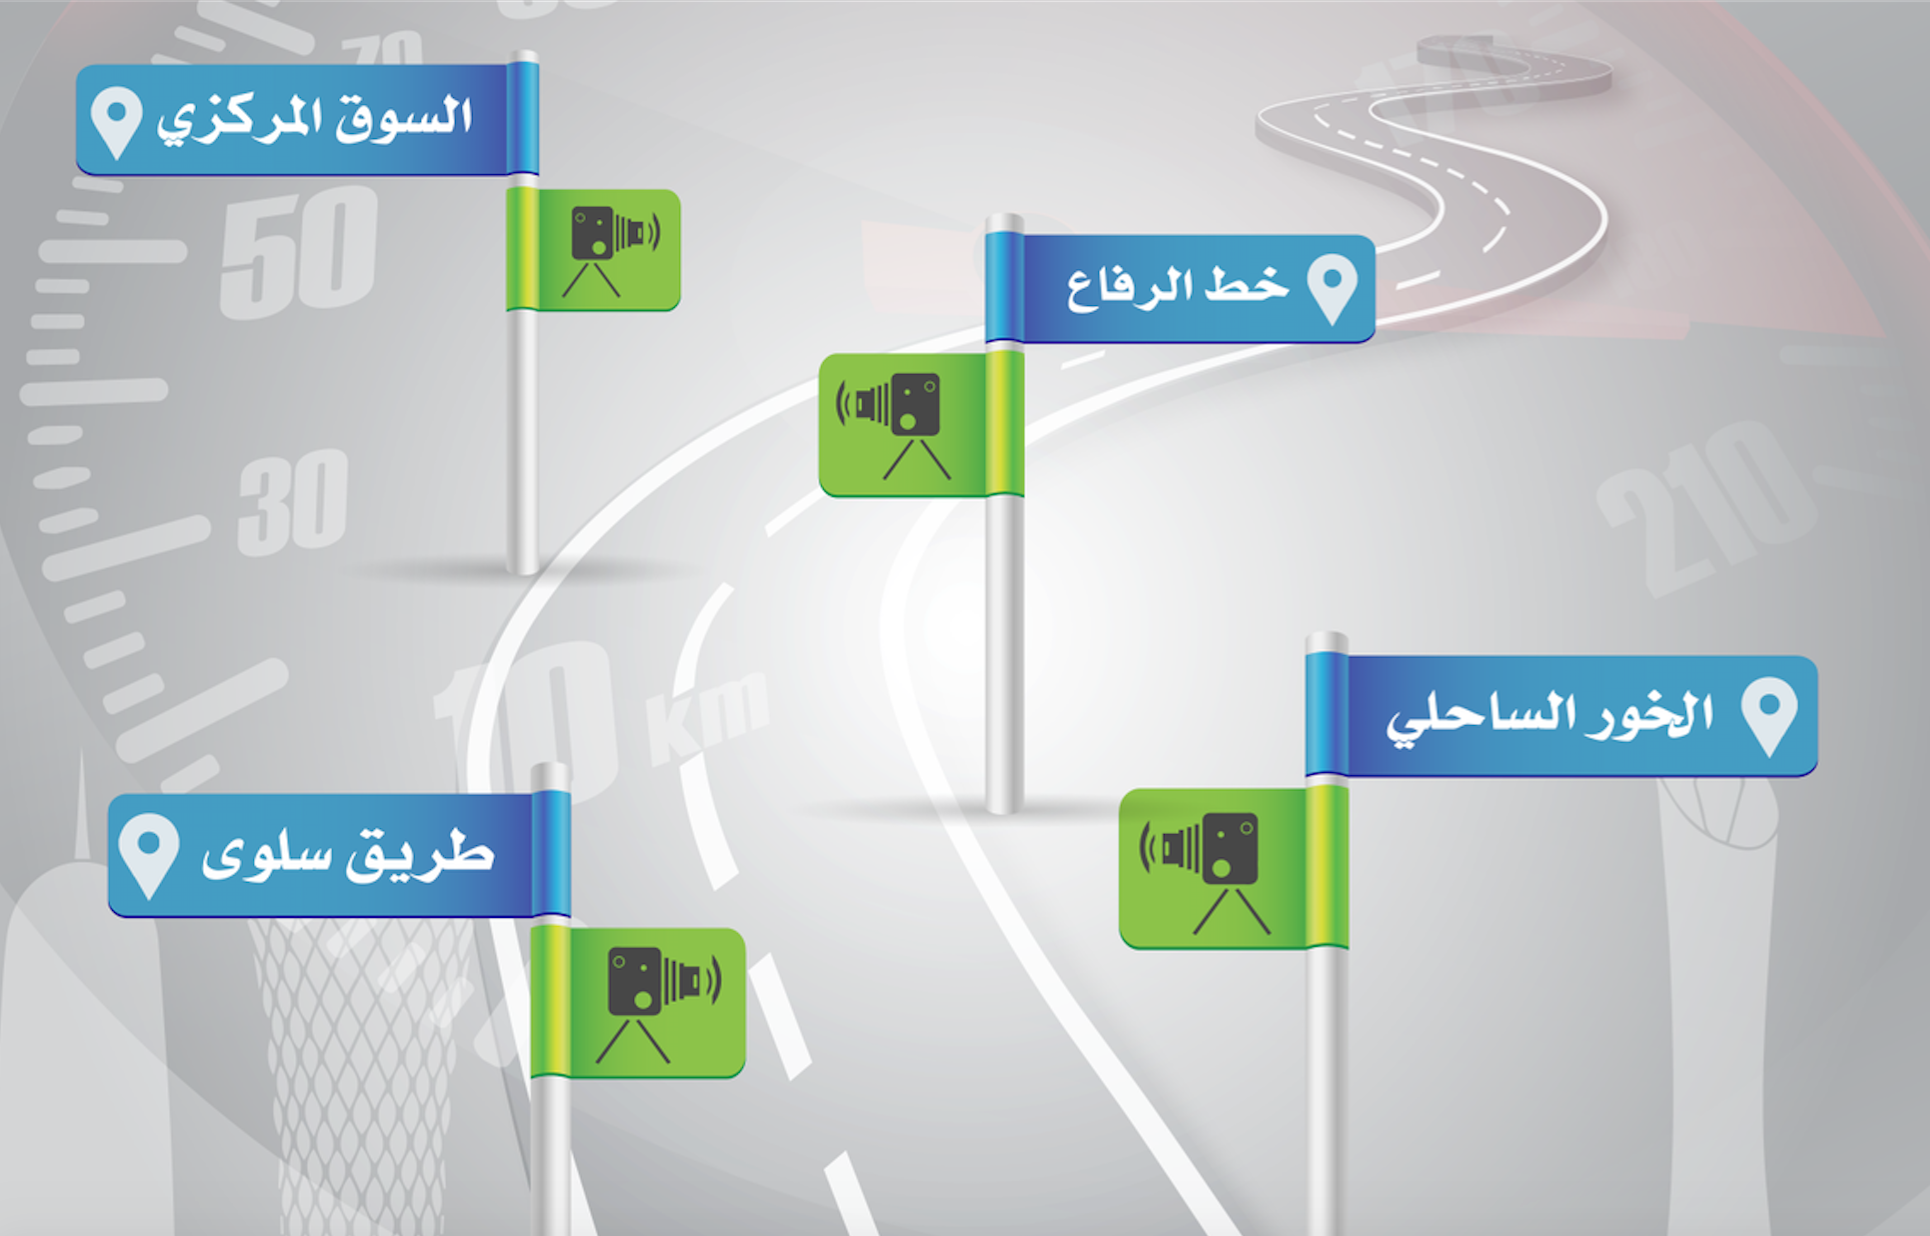 Alert for mobile radars on Qatar roads for Sun April 9th